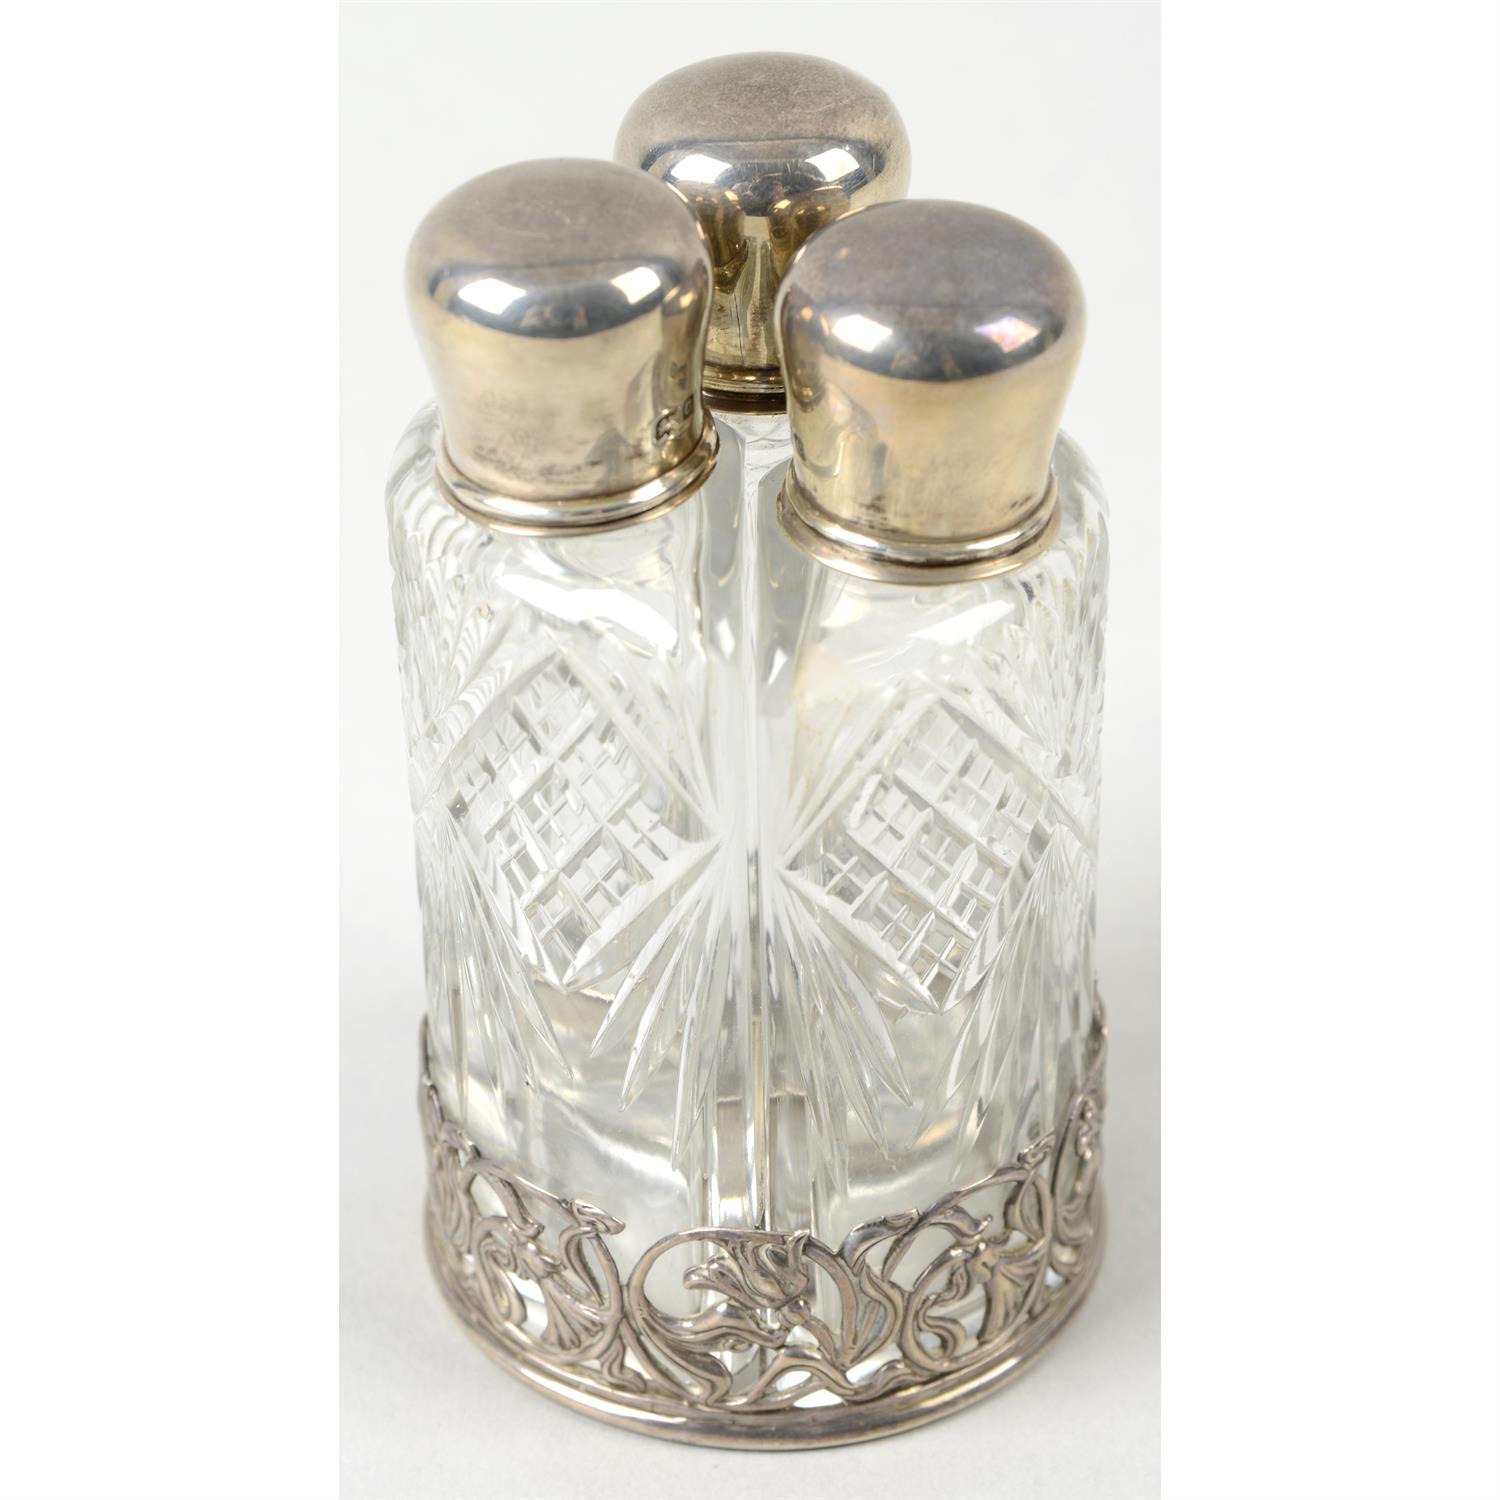 An Edwardian silver mounted three bottle perfume set.